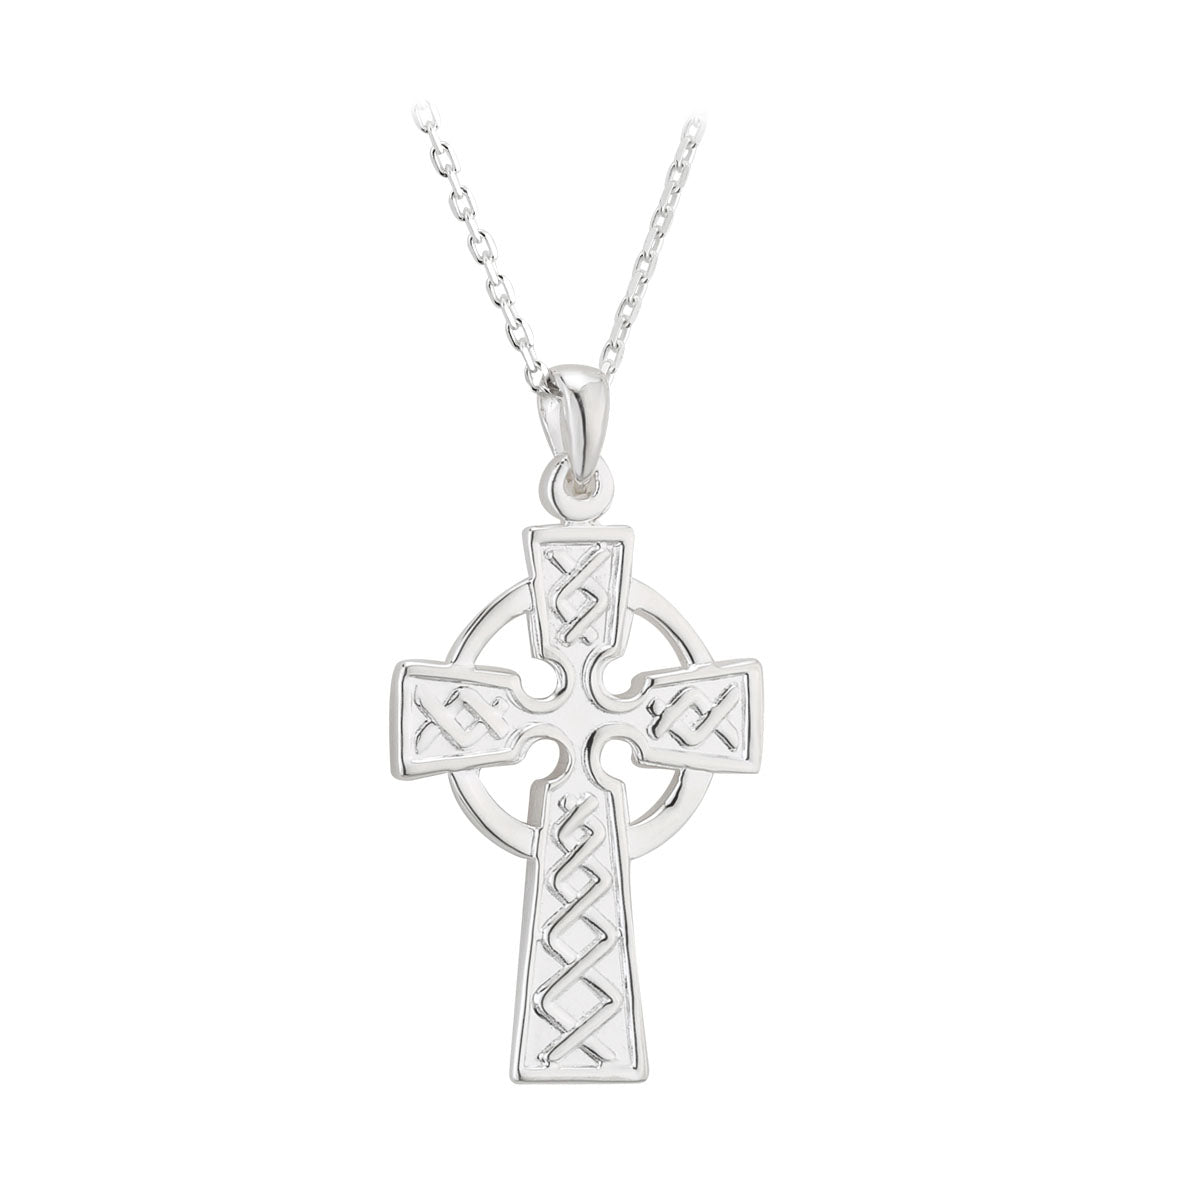 sterling silver celtic cross pendant double sided s4940 from Solvar